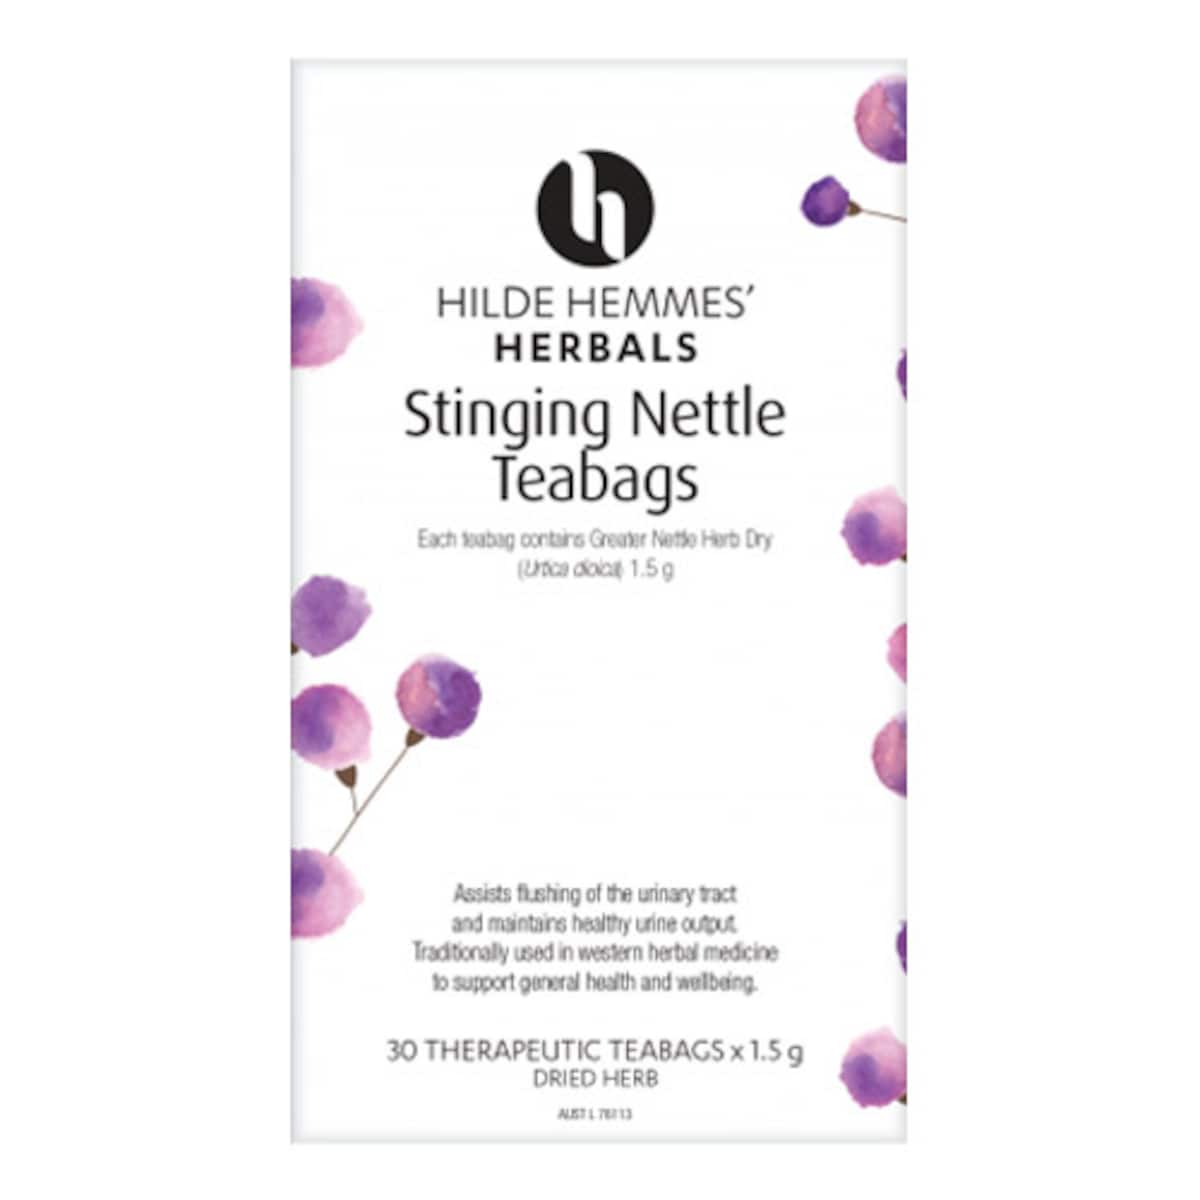 Hilde Hemmes Herbals Stinging Nettle 30 Tea Bags Australia